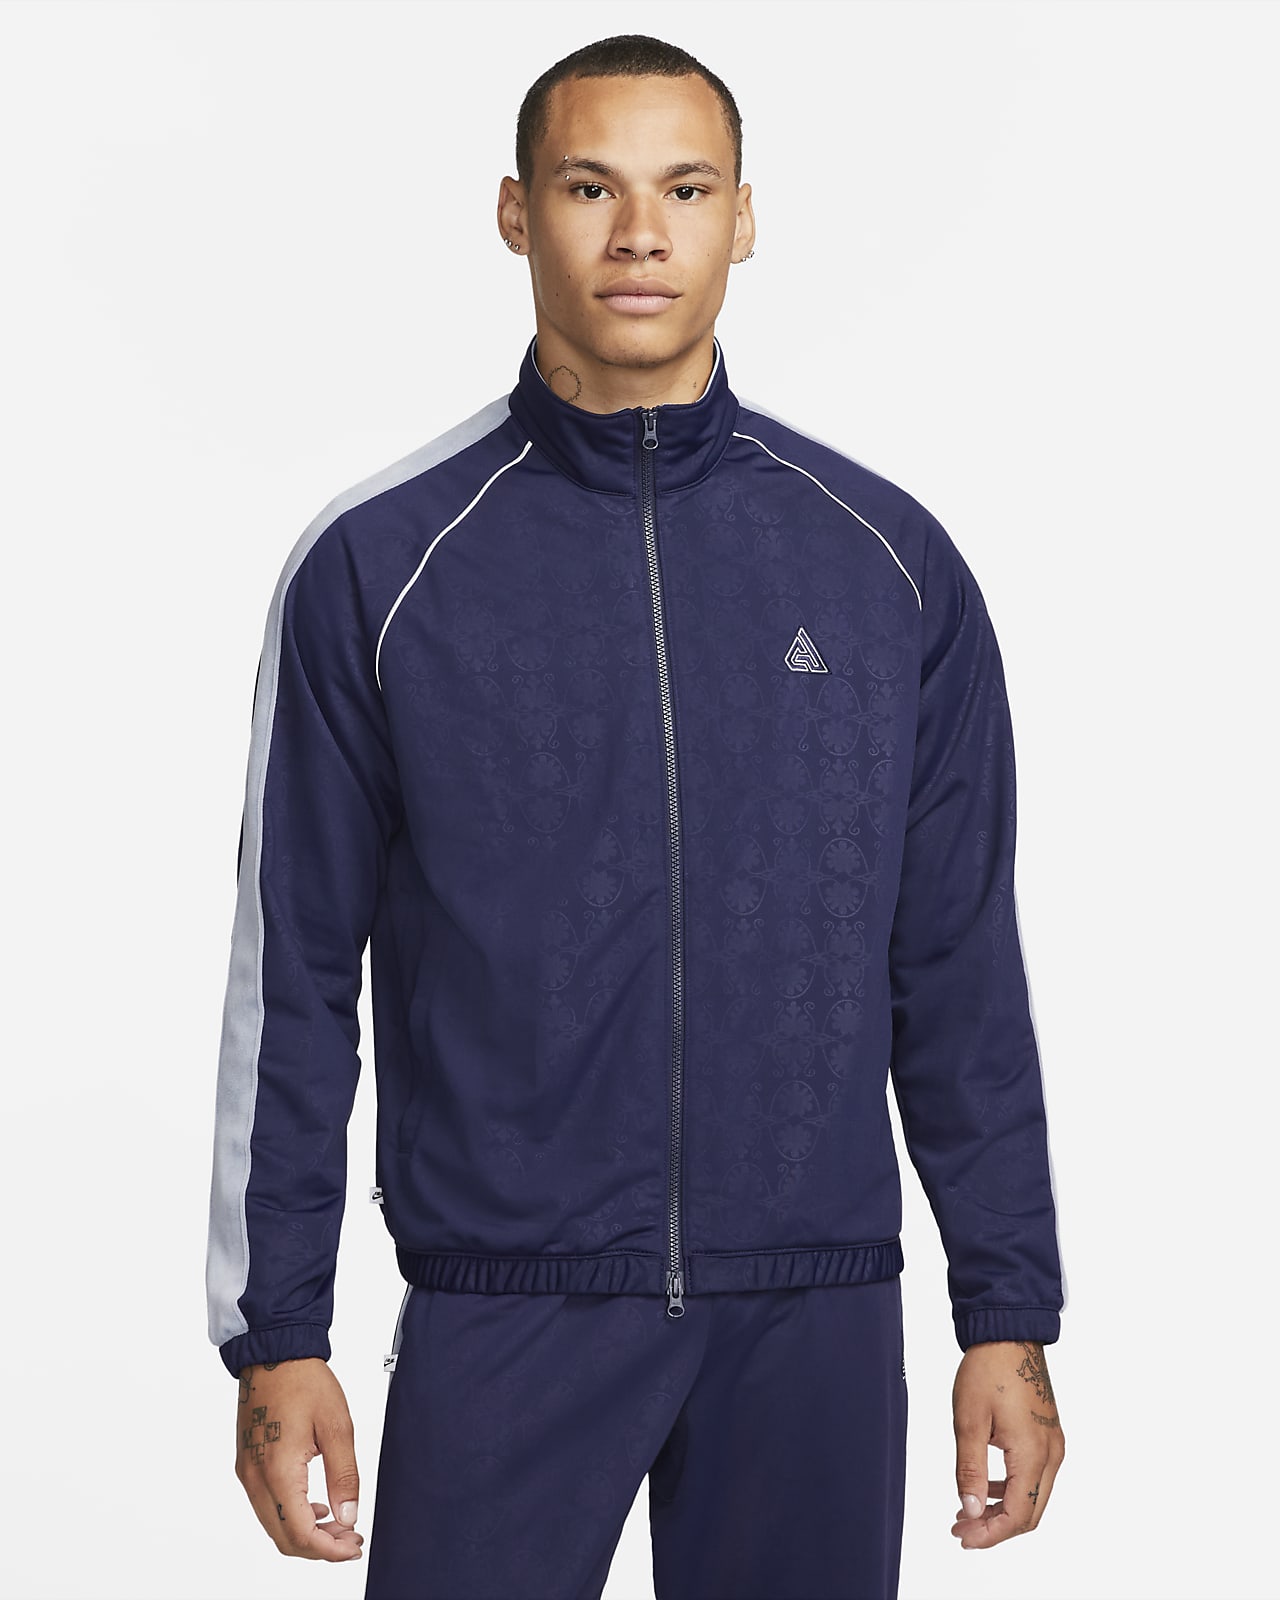 Men's Nike Basketball GIANNIS Track Jacket, CQ6308-010